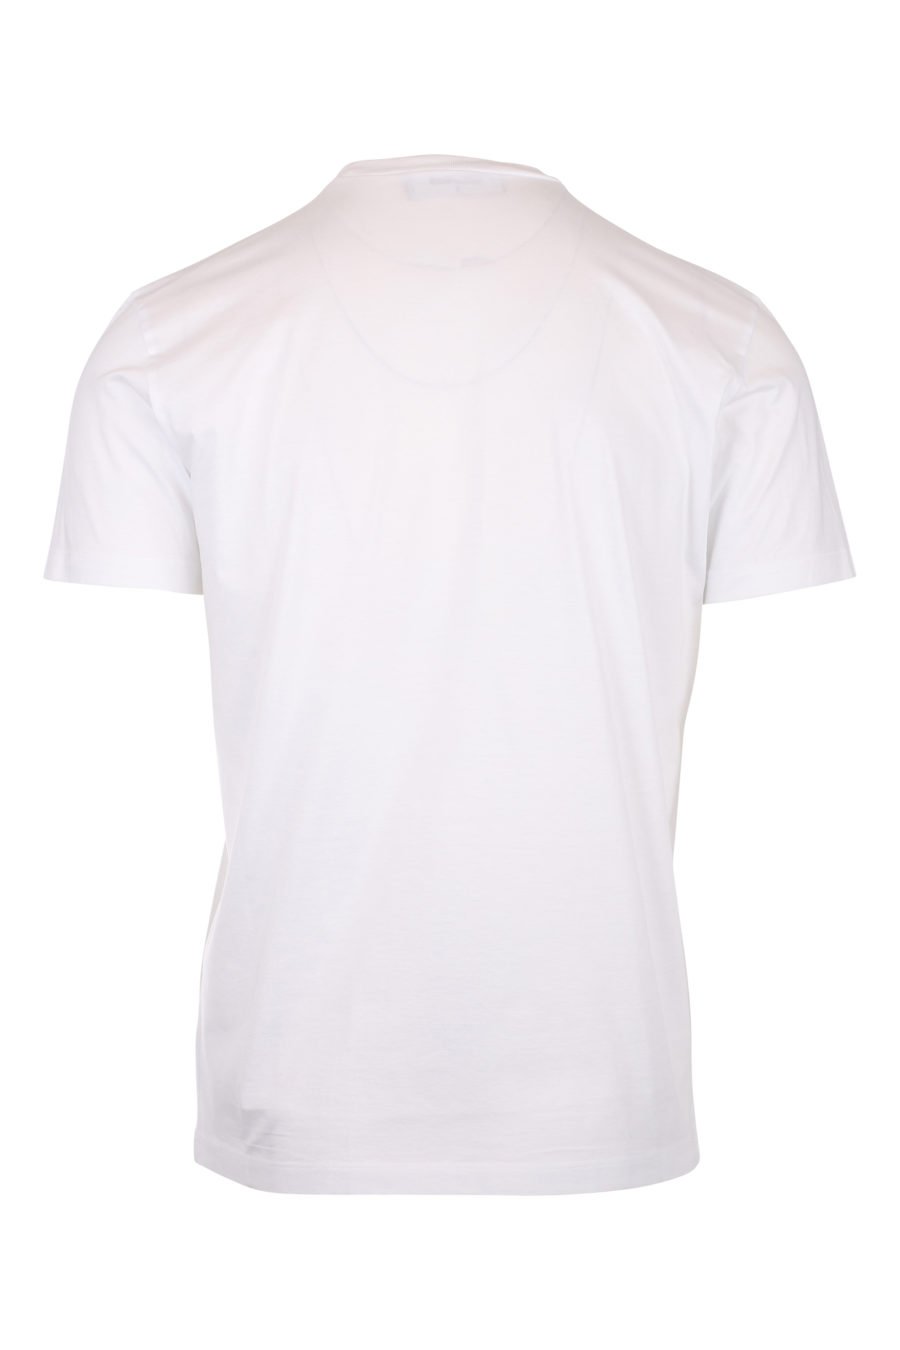 T-shirt branca com pequeno logótipo ceresio 9 - IMG 9778 1